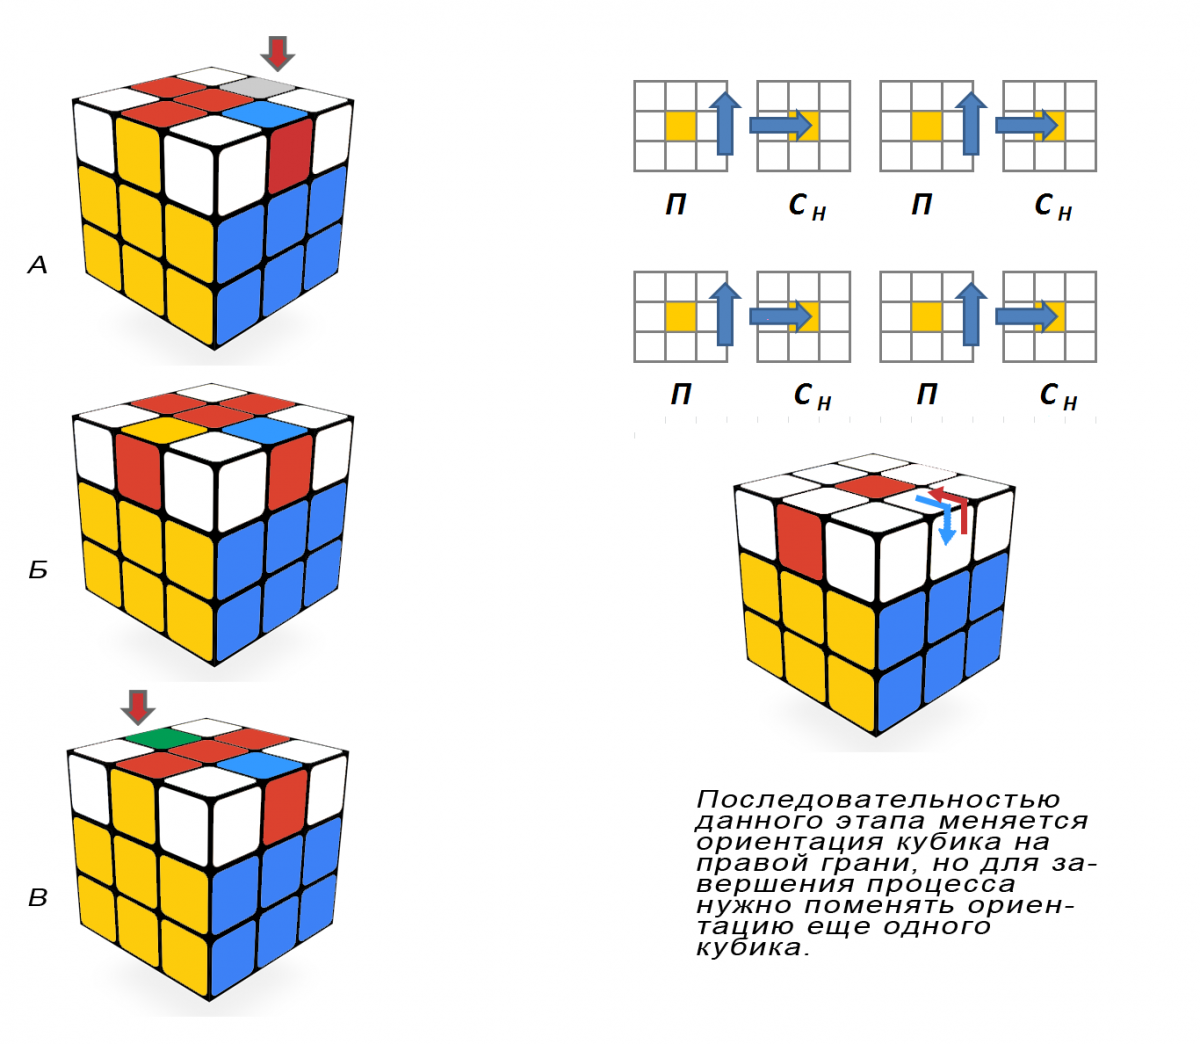 Кубик рубика самая простая сборка. Сбор кубика Рубика 3х3 пошагово. Сборка верхнего слоя кубика Рубика 3х3. Кубик рубик 3х3 схема сборки. Формула кубика Рубика 3 на 3.